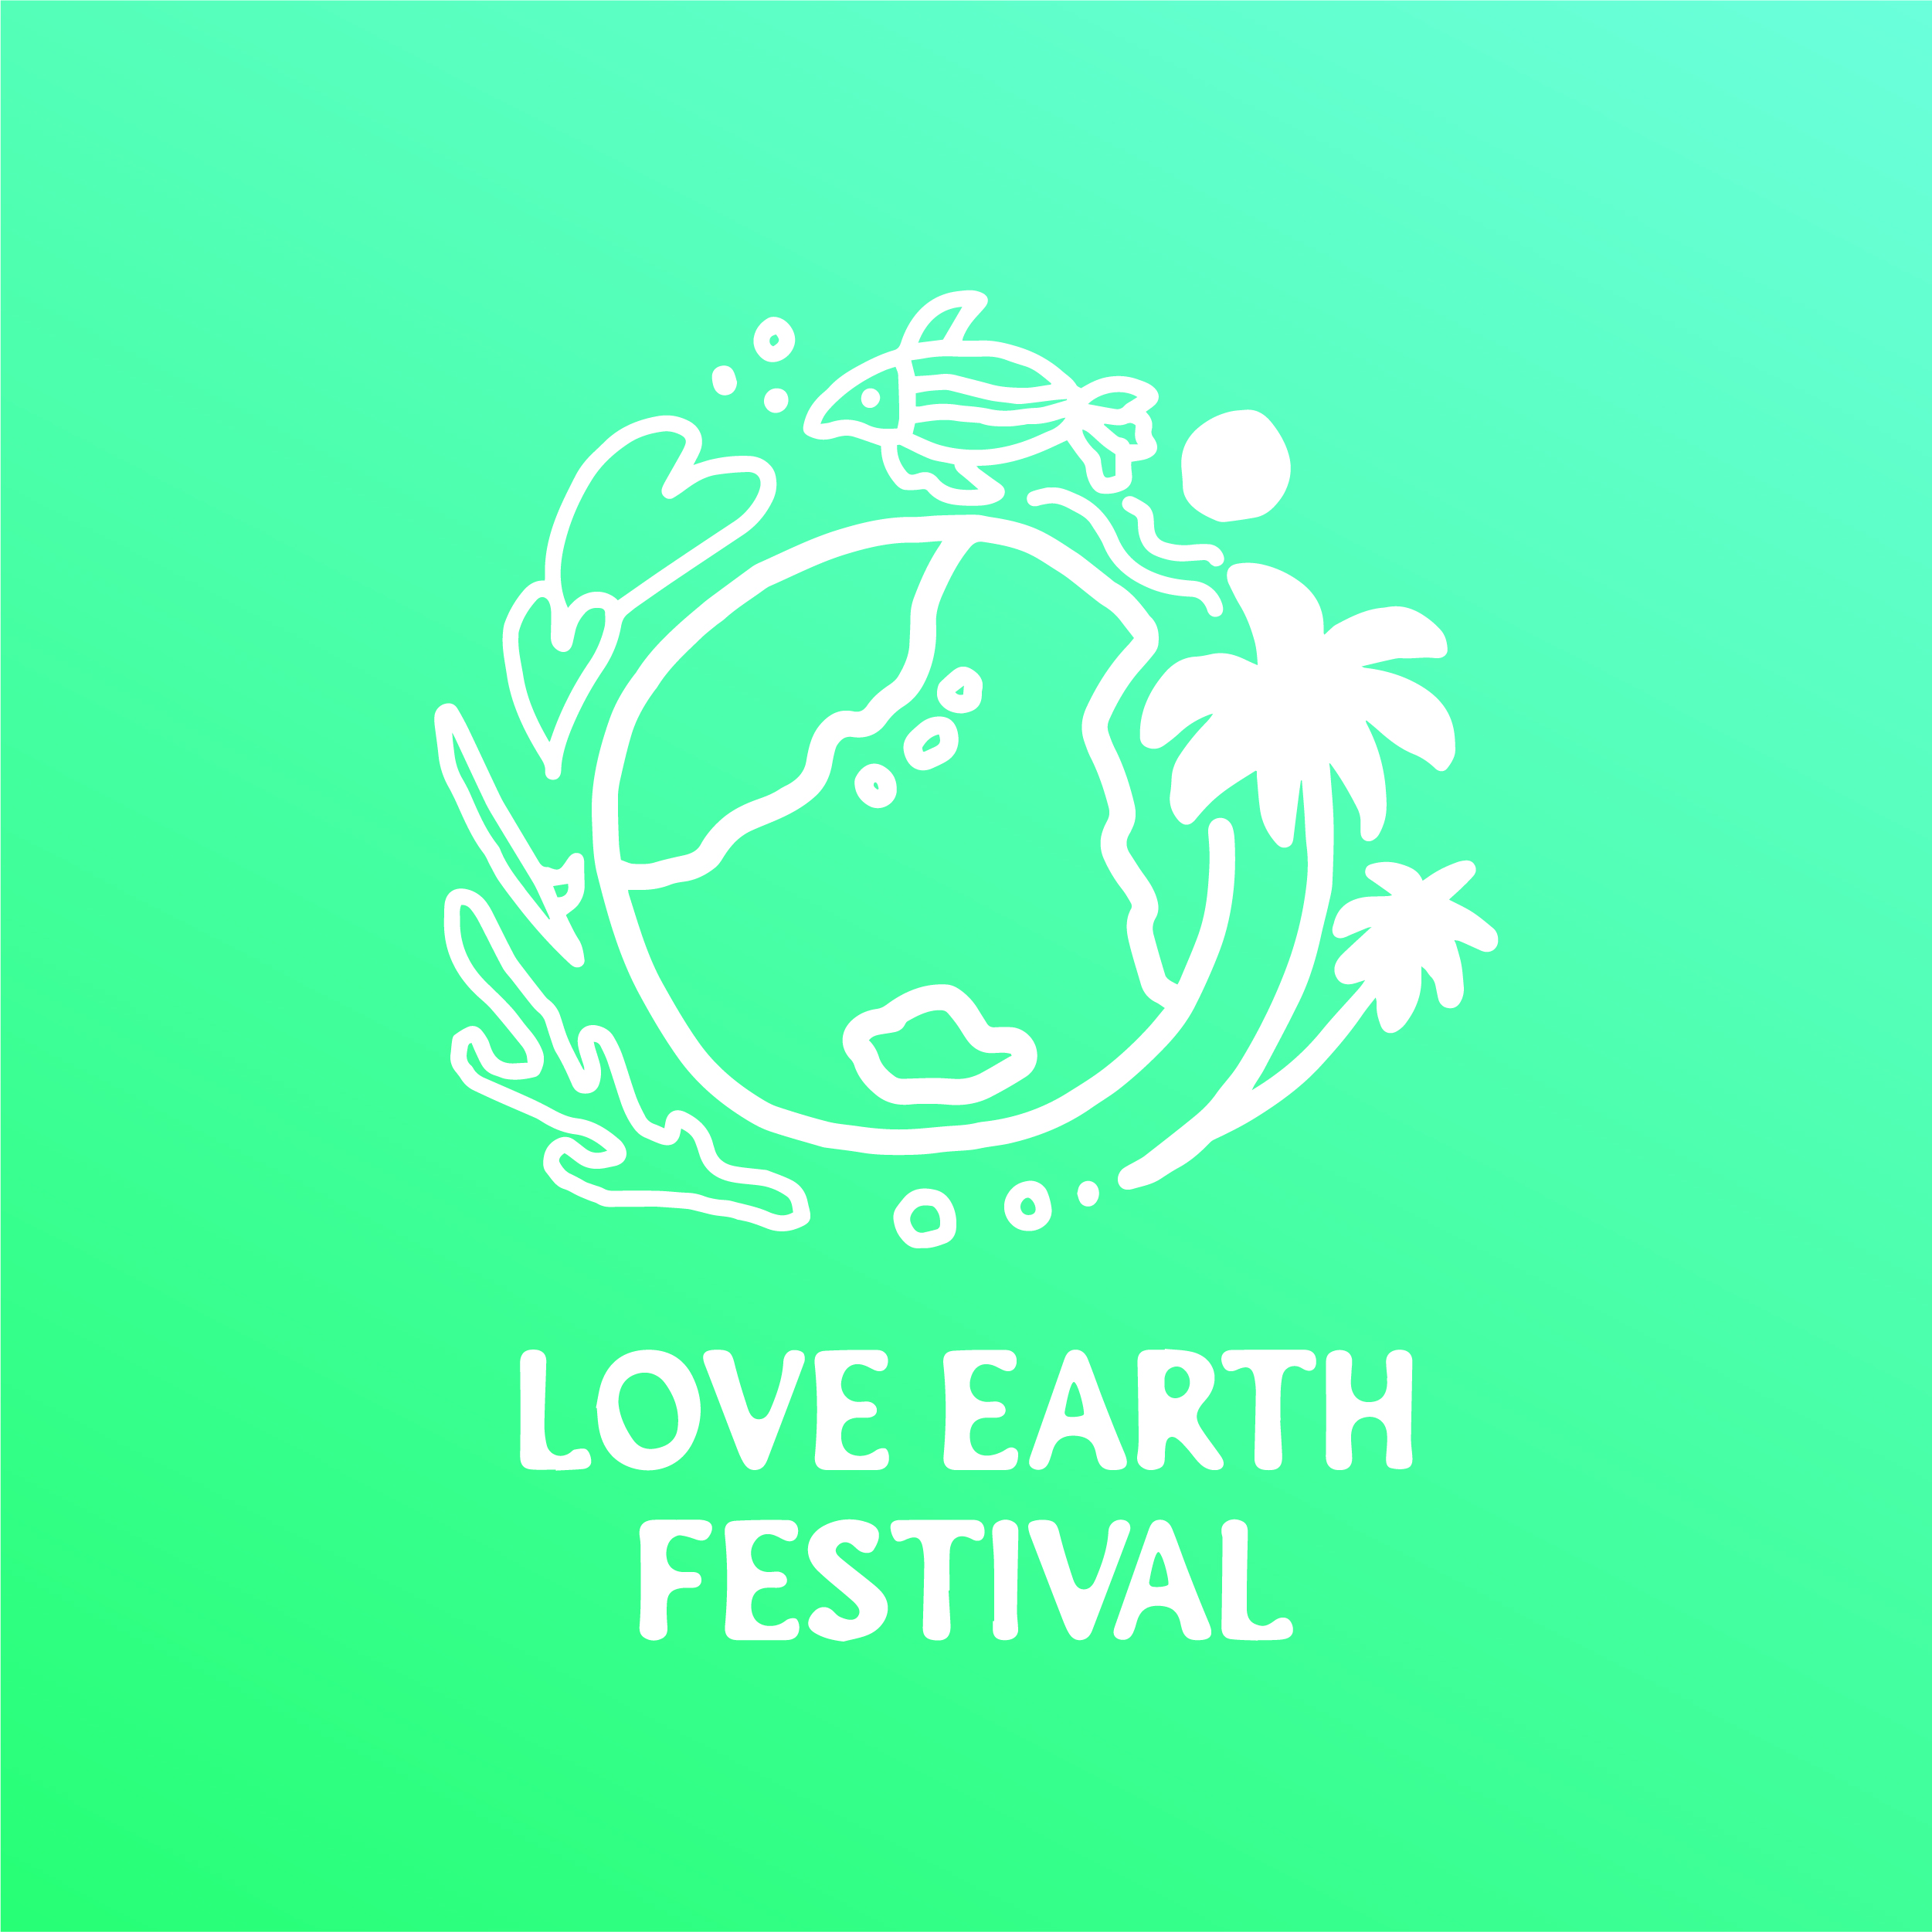 LOVE EARTH FESTIVAL